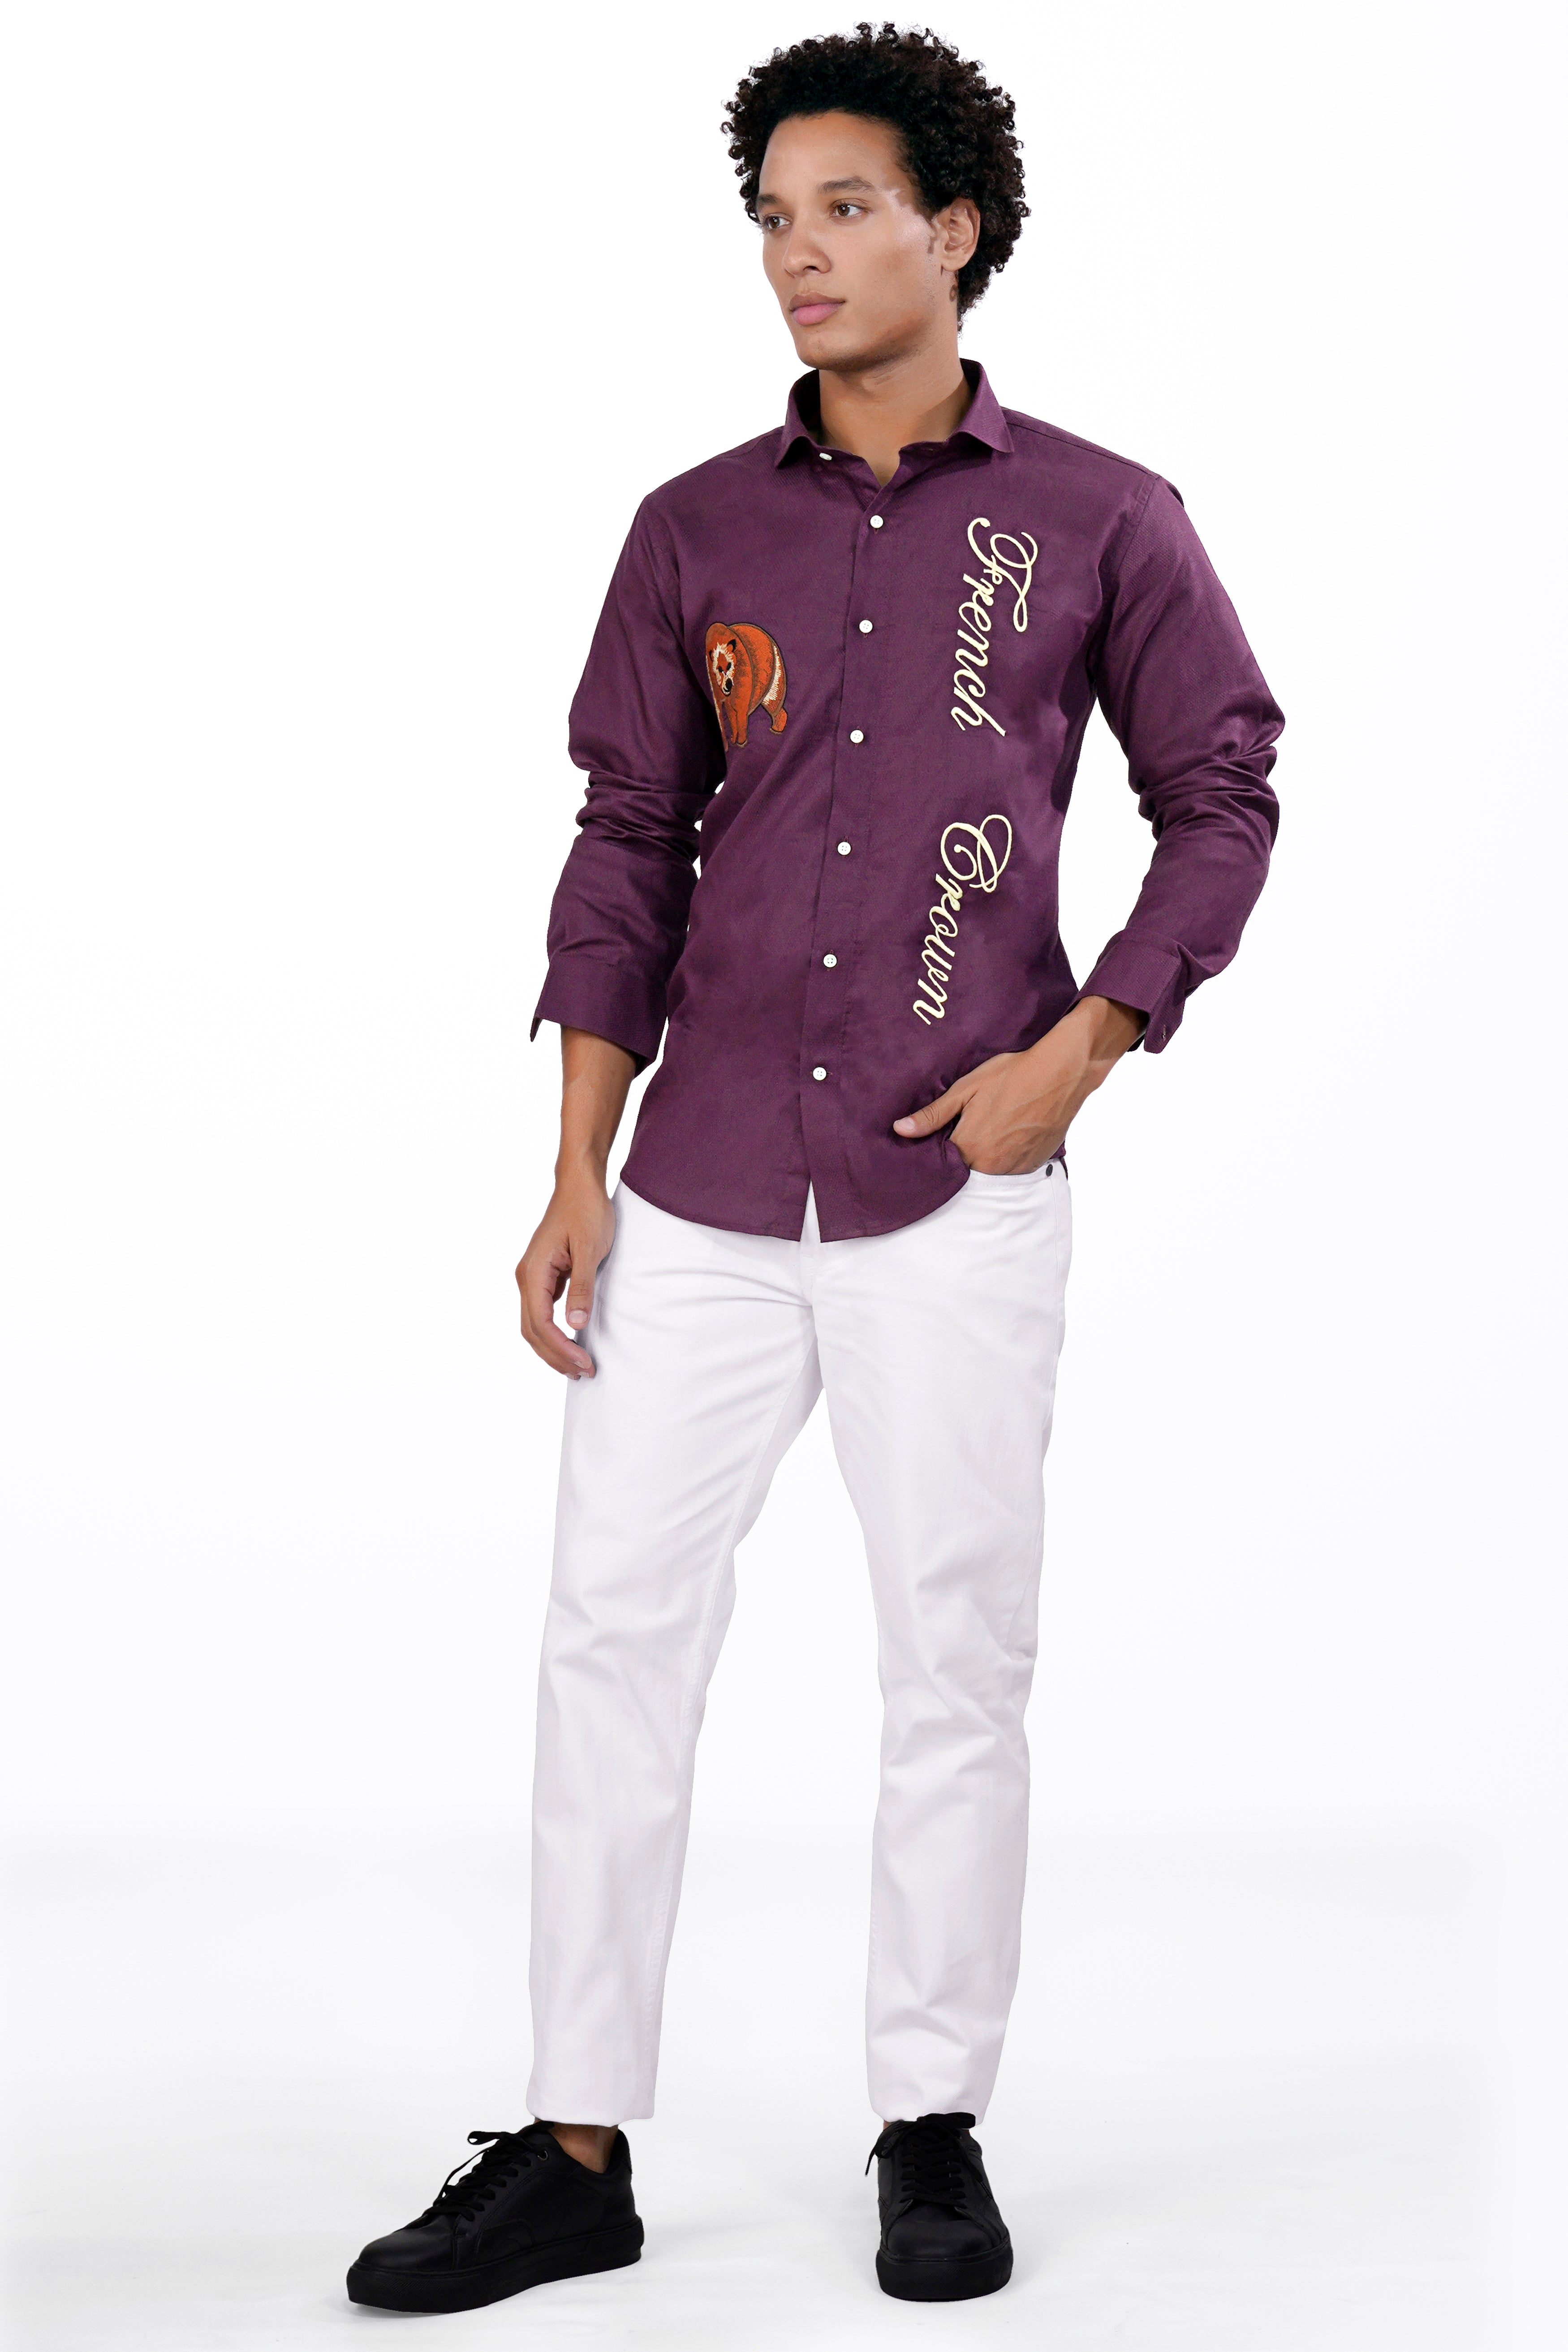 Plum Purple Embroidered Dobby Textured Premium Giza Cotton Designer Shirt 8729-CA-E215-38, 8729-CA-E215-H-38, 8729-CA-E215-39, 8729-CA-E215-H-39, 8729-CA-E215-40, 8729-CA-E215-H-40, 8729-CA-E215-42, 8729-CA-E215-H-42, 8729-CA-E215-44, 8729-CA-E215-H-44, 8729-CA-E215-46, 8729-CA-E215-H-46, 8729-CA-E215-48, 8729-CA-E215-H-48, 8729-CA-E215-50, 8729-CA-E215-H-50, 8729-CA-E215-52, 8729-CA-E215-H-52